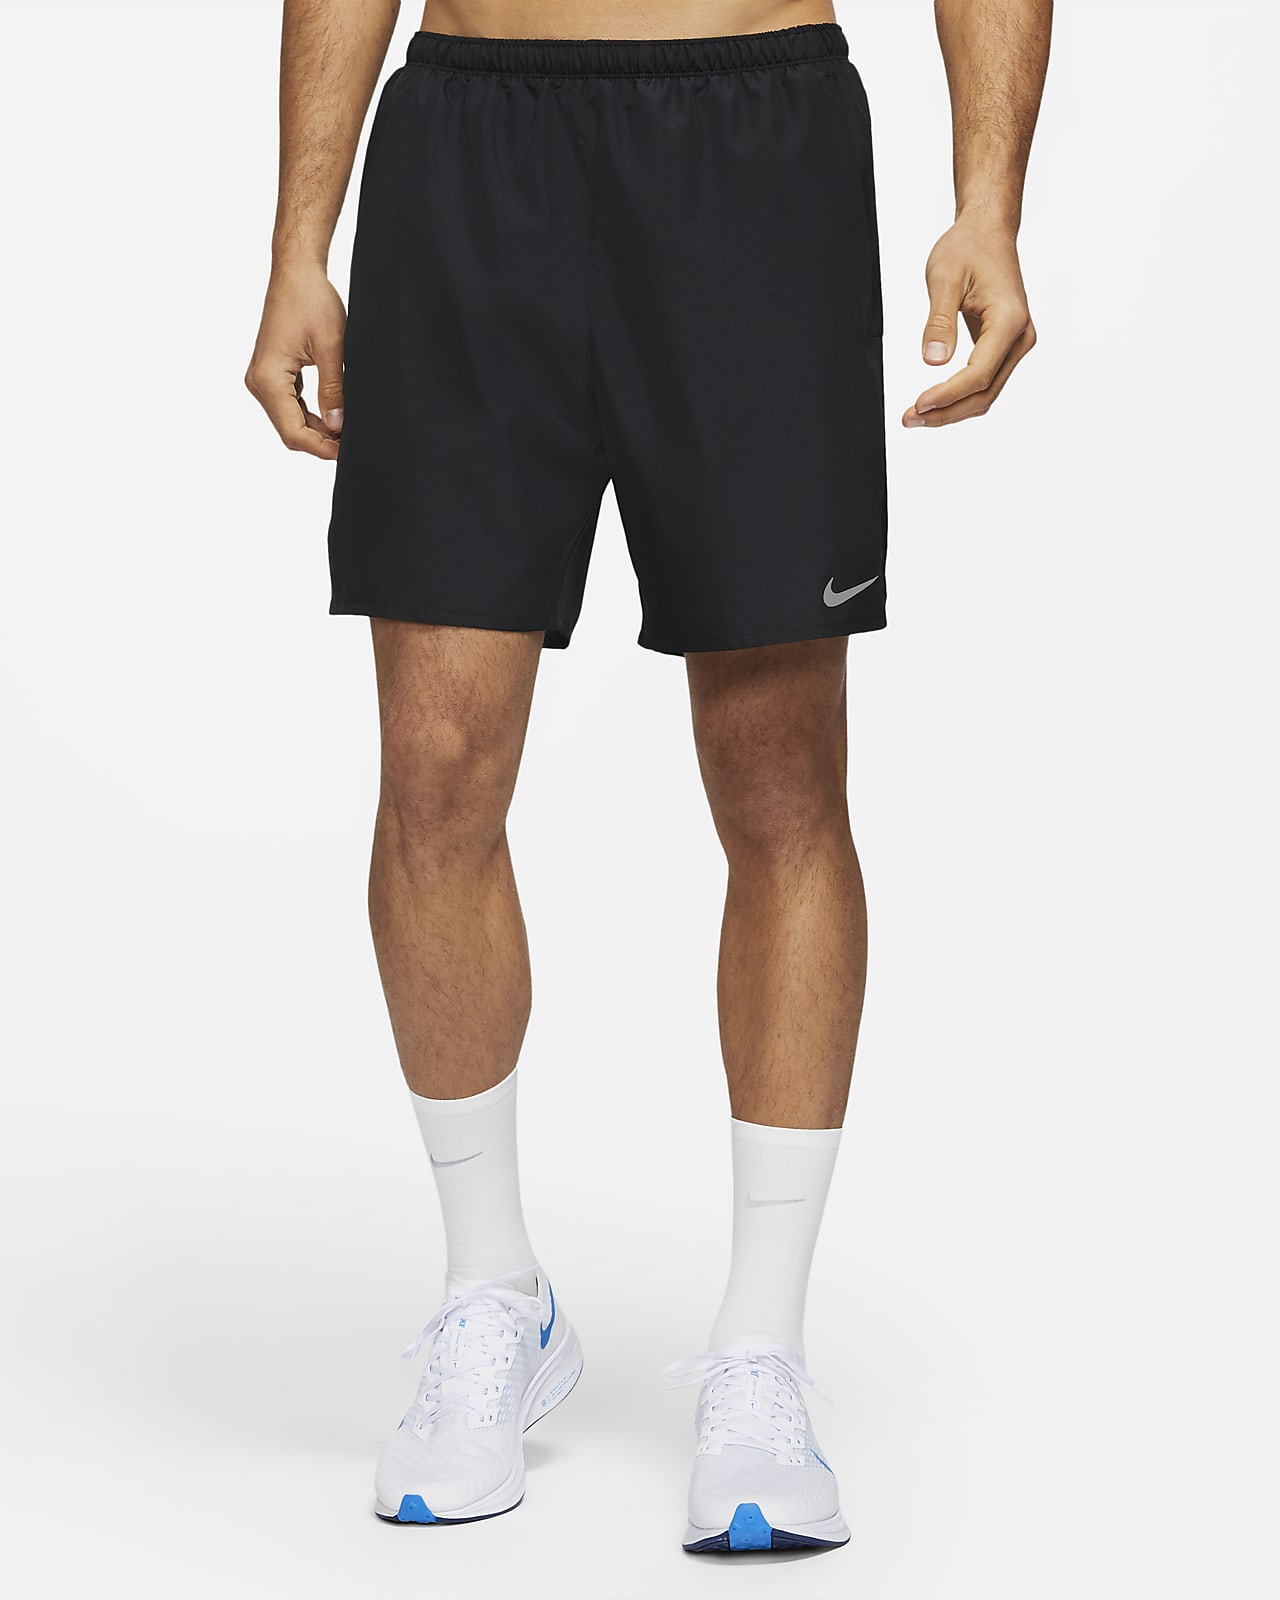 Nike Challenger Pantalons curts 2 en 1 de running - Home